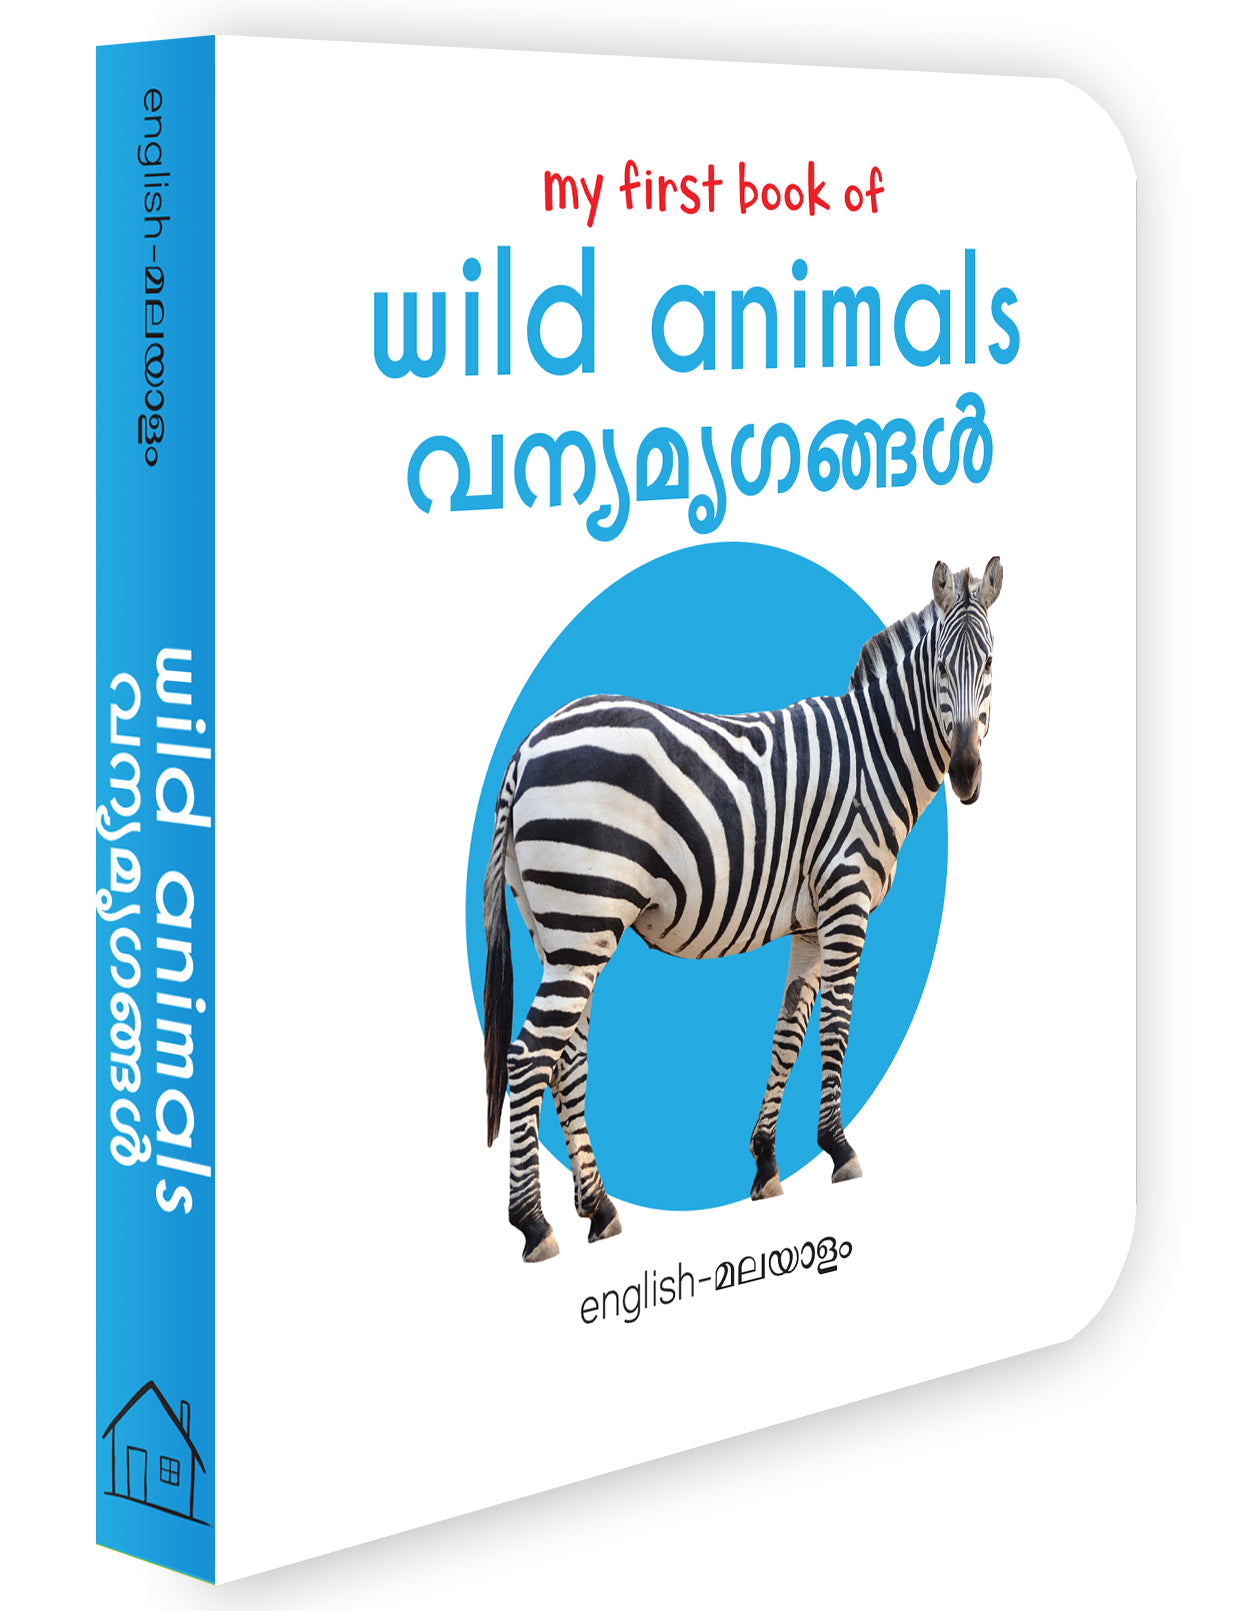 My First Book of Wild Animals - Vanya Mirugangal : My First English Malayalam Board Book